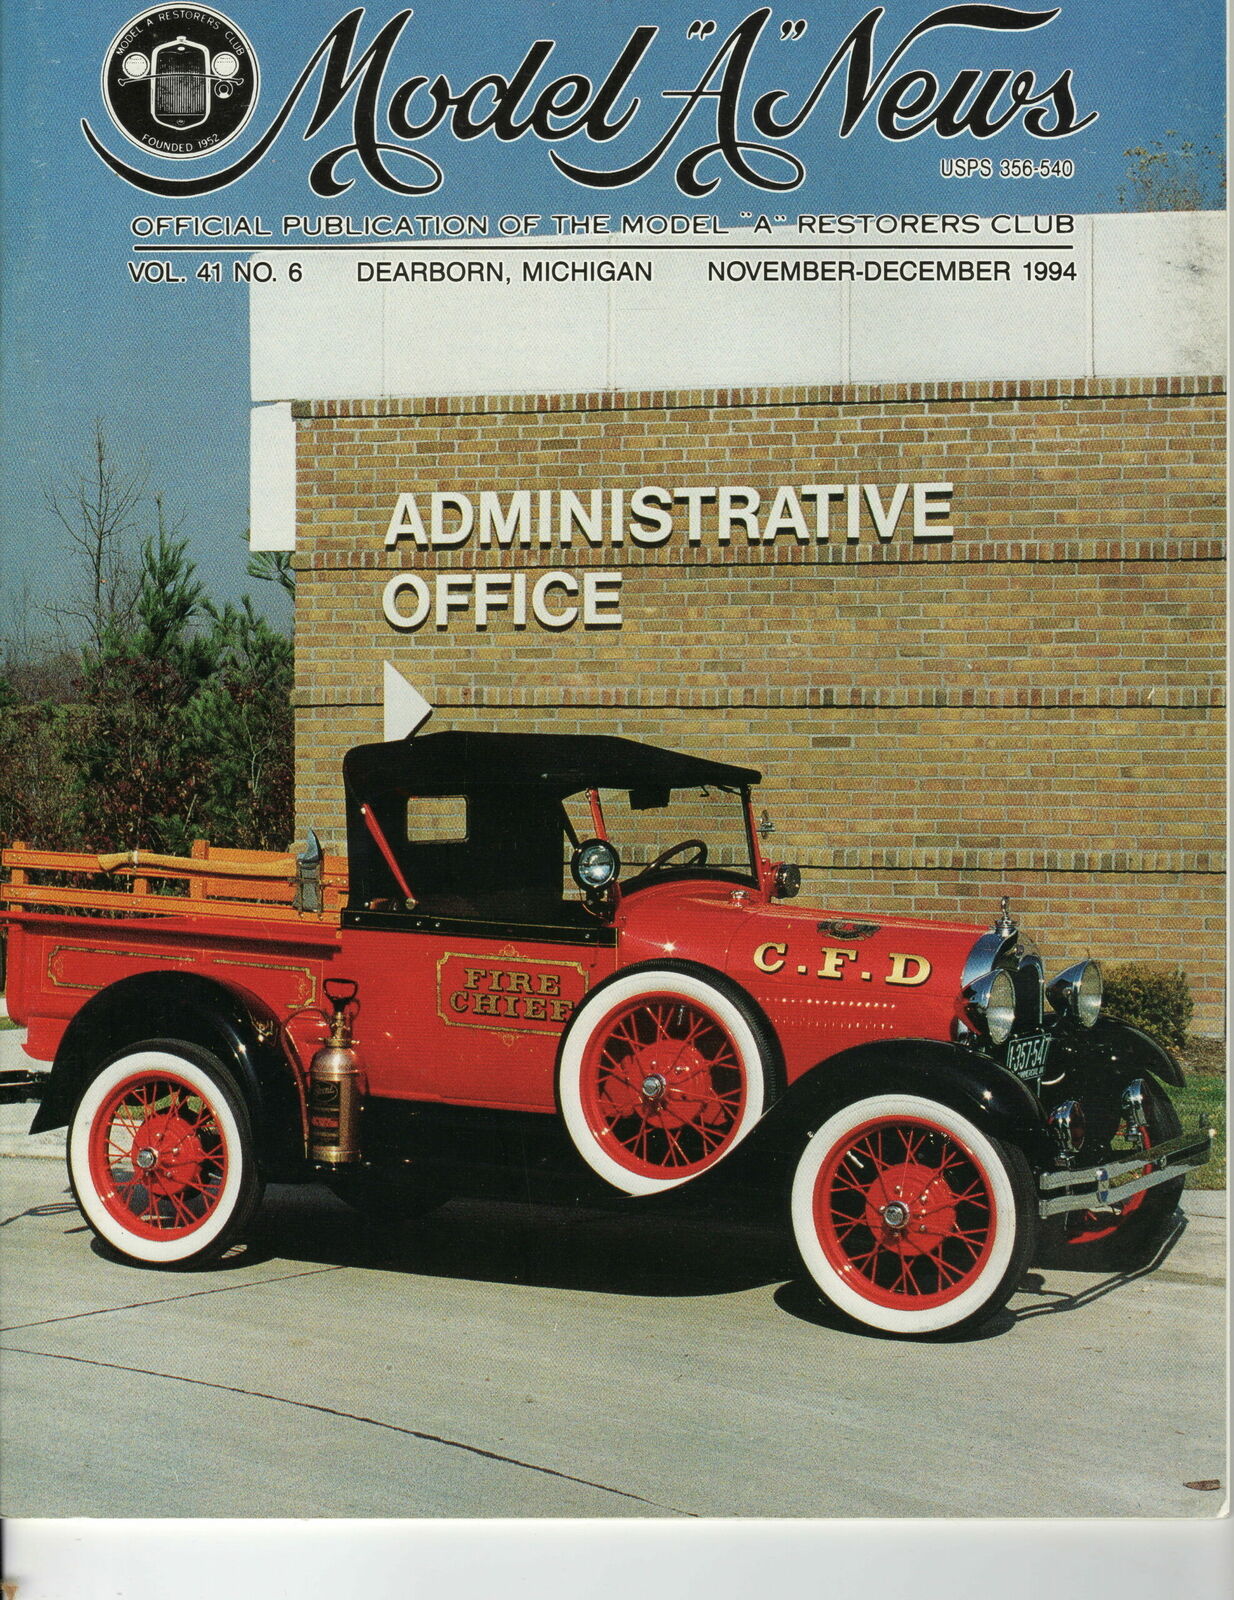 1928 ROADSTER PICKUP - MODEL “A” NEWS OFFICIAL PUBLICATION VOL.41 NO.6 1994